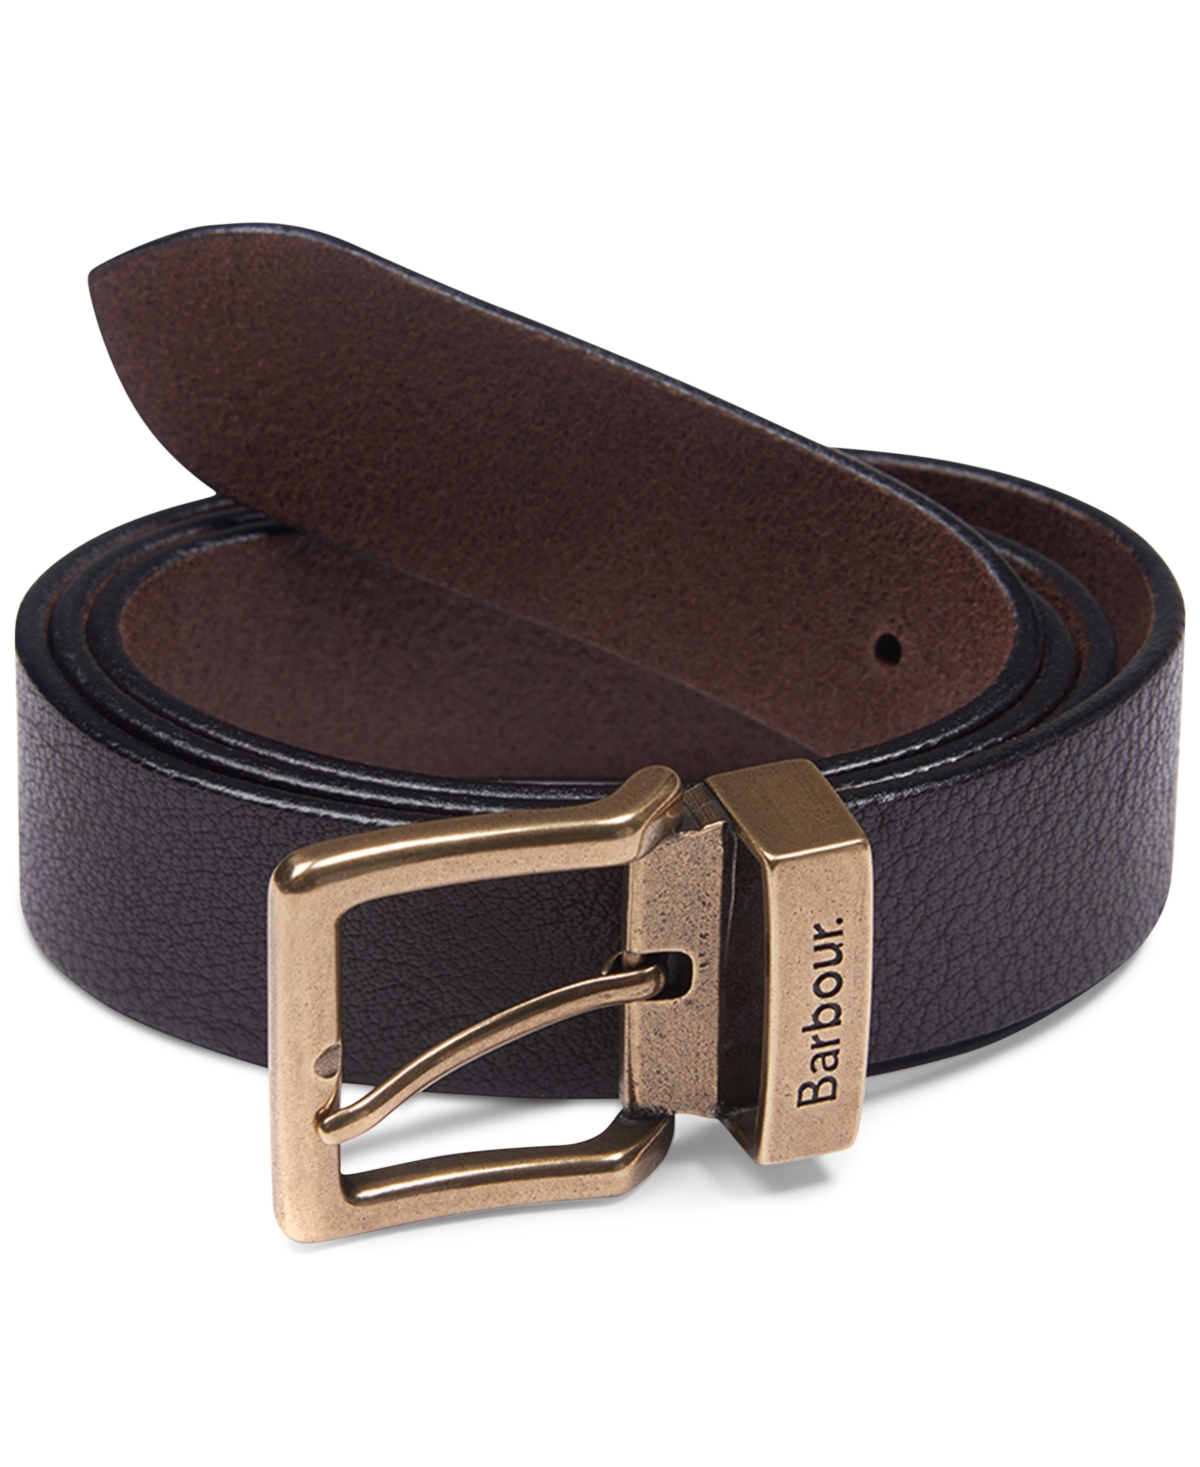 Men's Blakely Leather Belt - Dark Brown